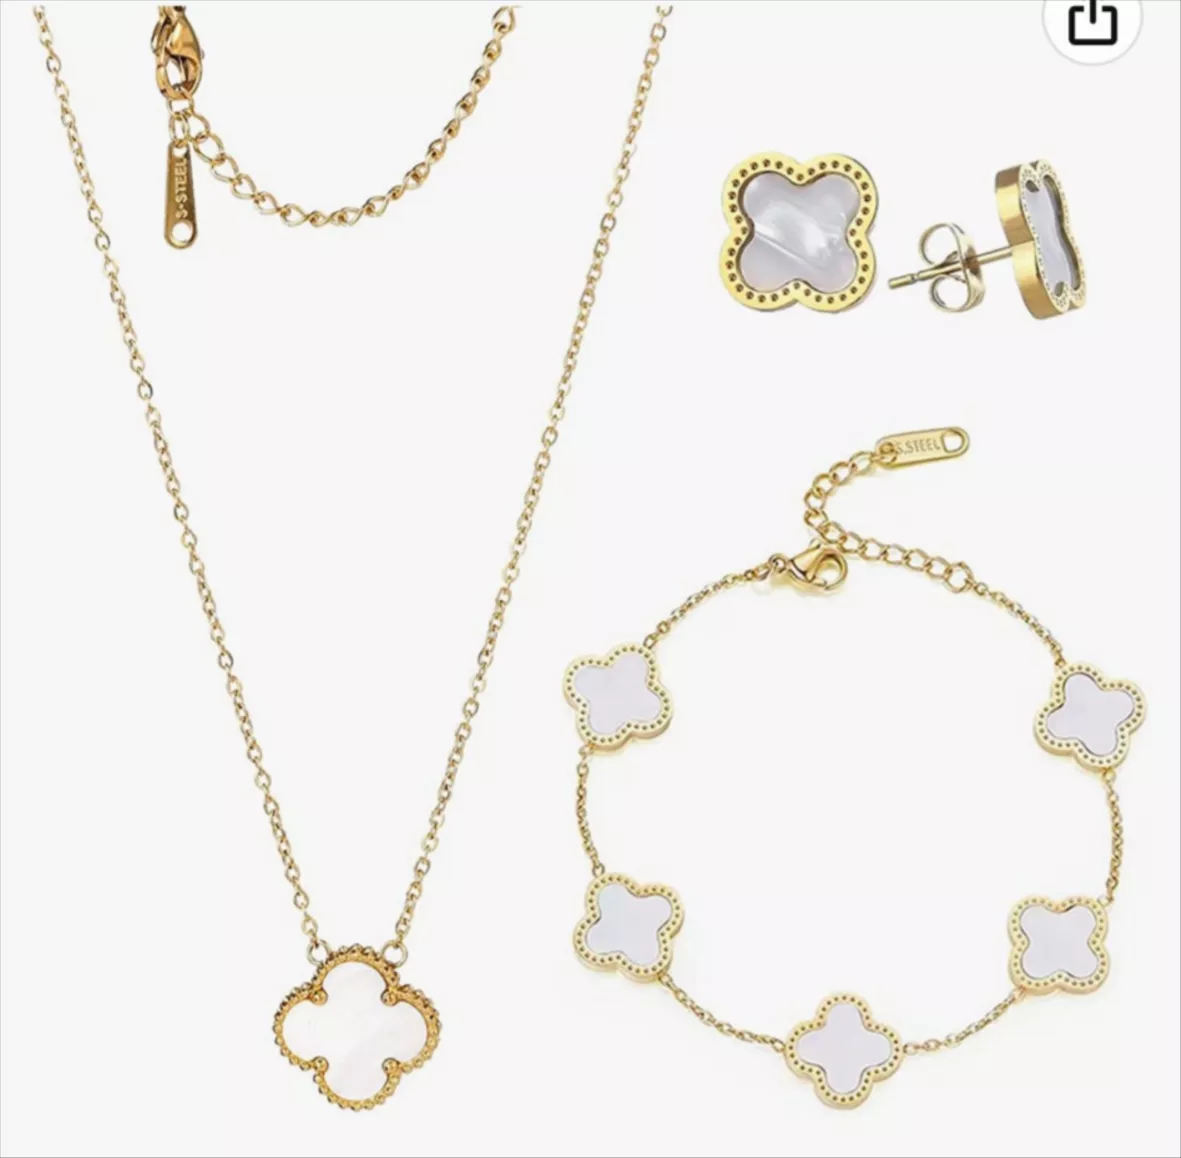 mandytv's Jewelry Collection on LTK